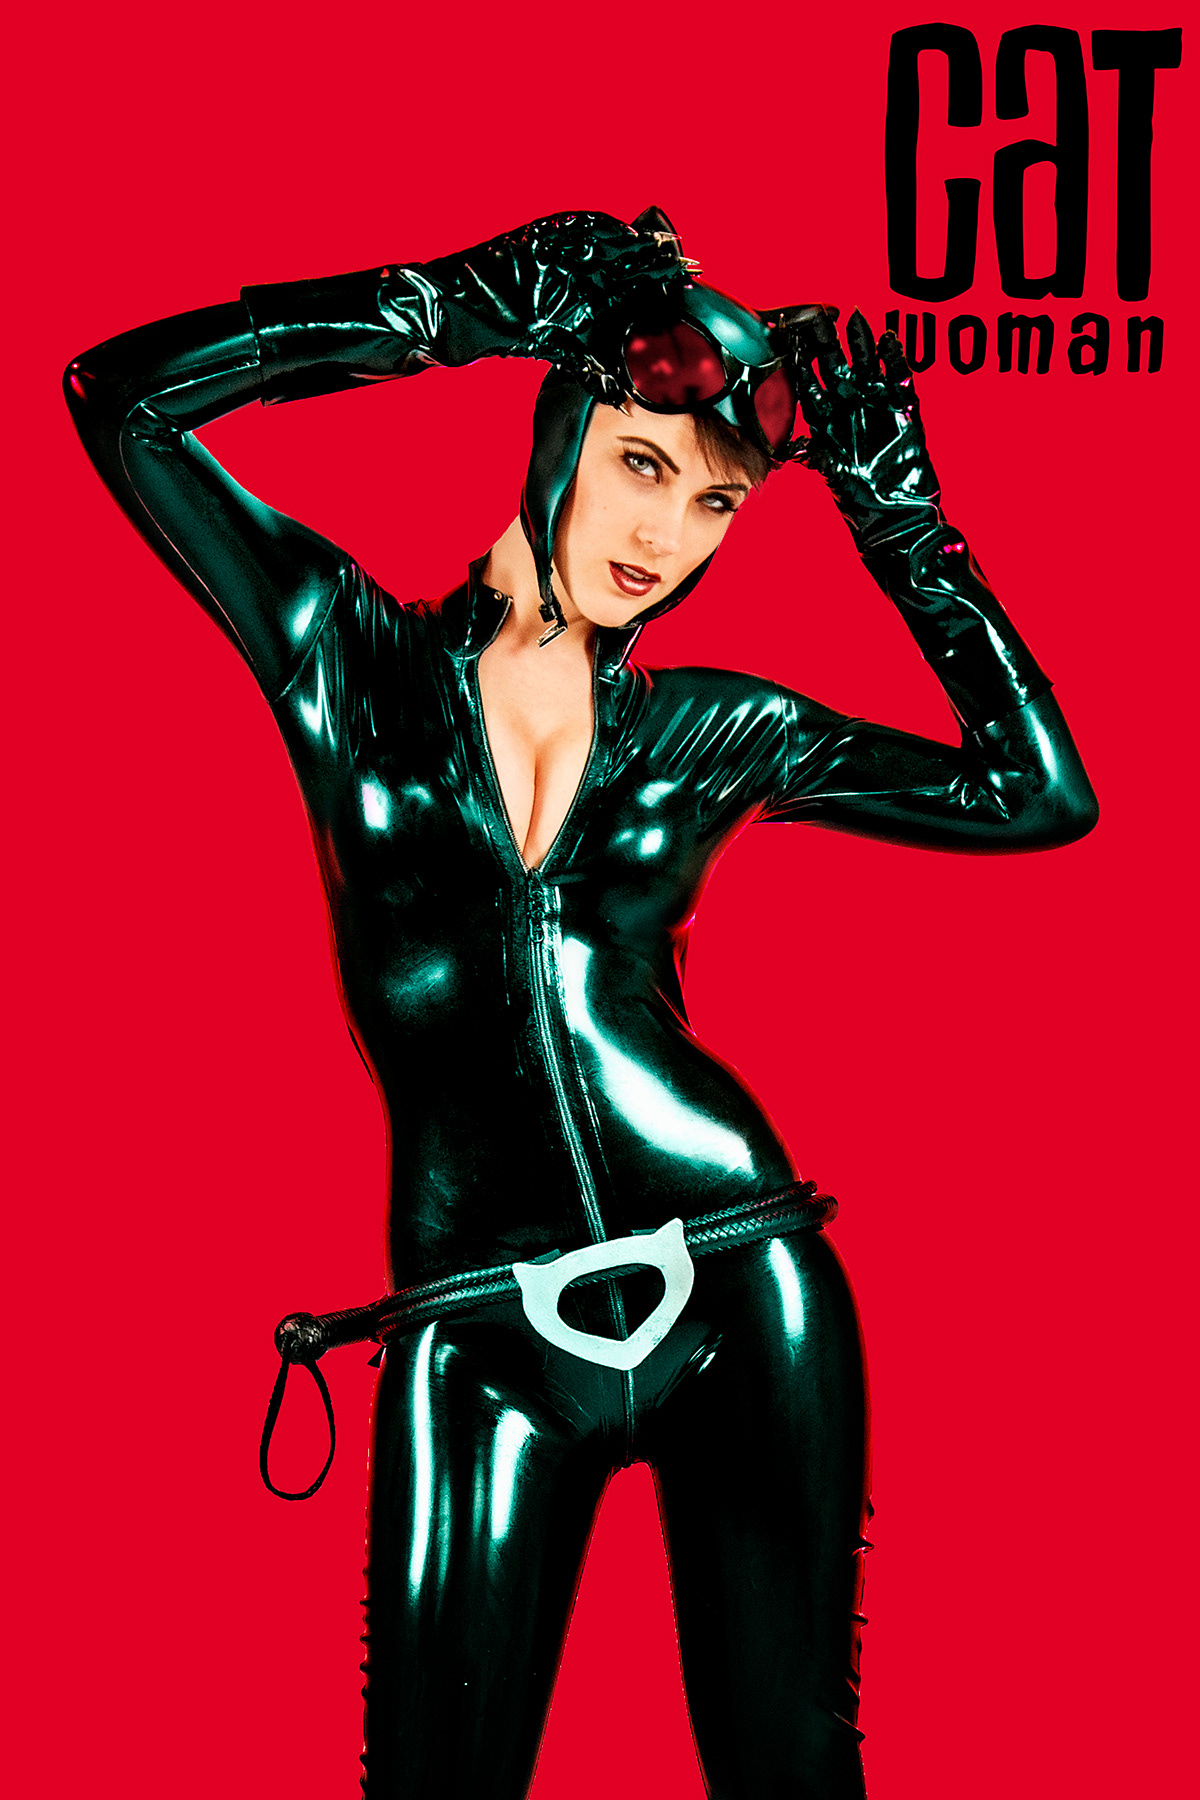 catwoman batman eve beauregard Composite photoshop creative edge studios andrew dobell